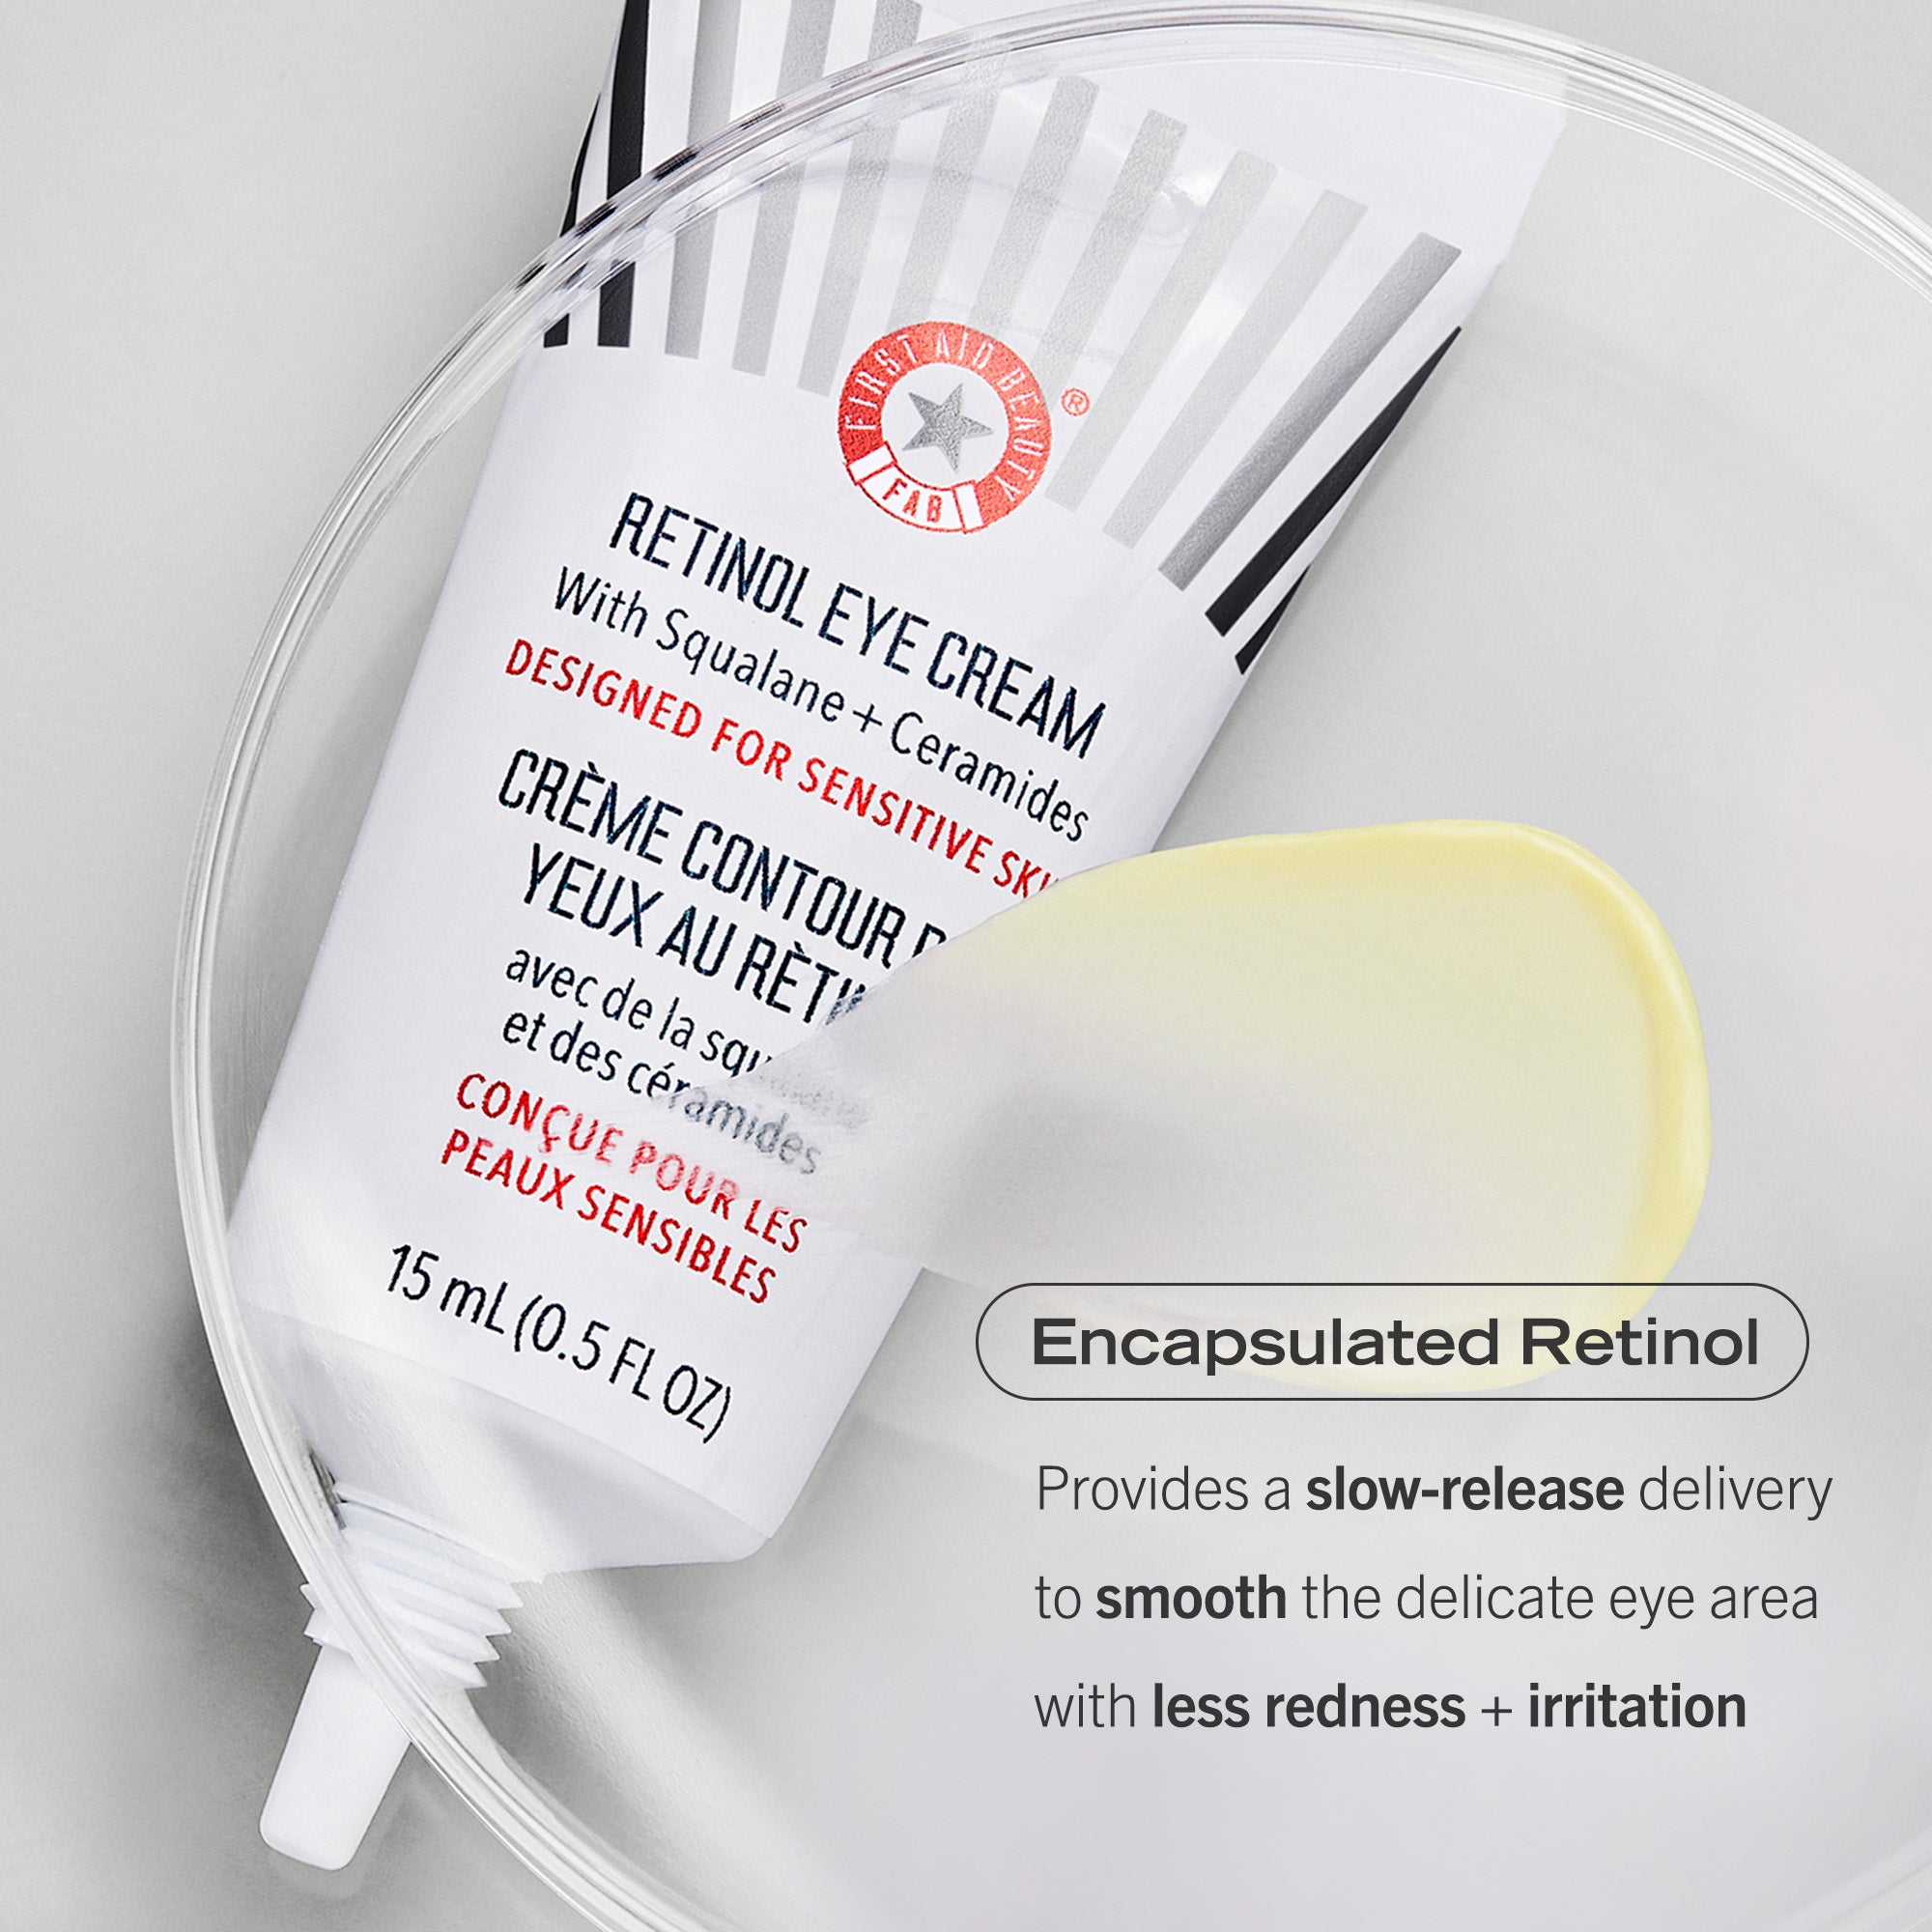 Retinol Eye Cream with Squalane + Ceramides – First Aid Beauty